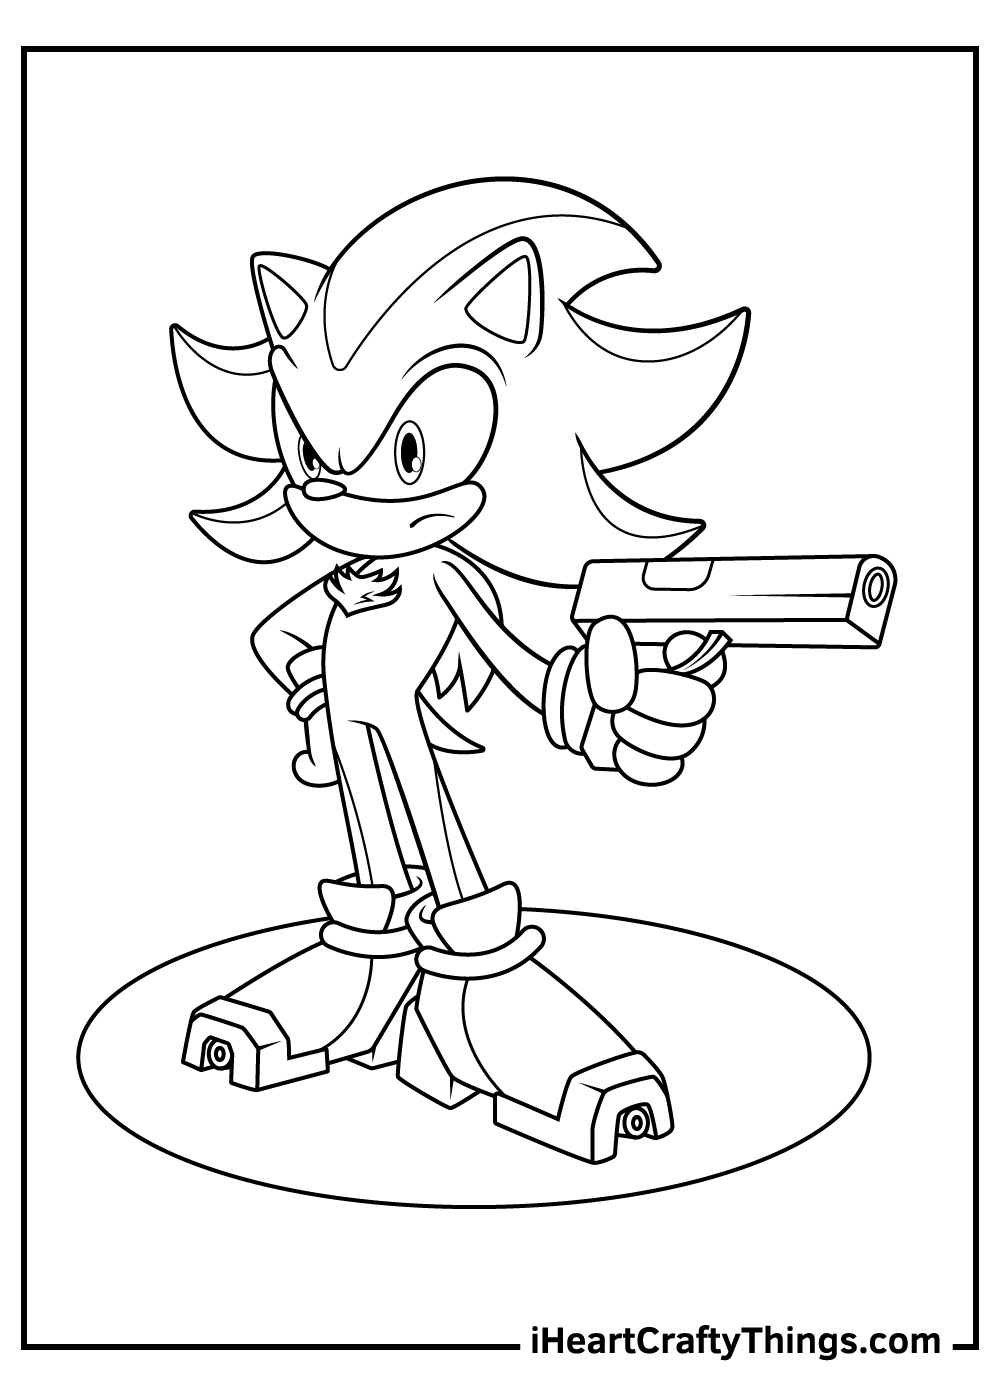 Sonic drawing I made earlier : r/SonicTheHedgehog